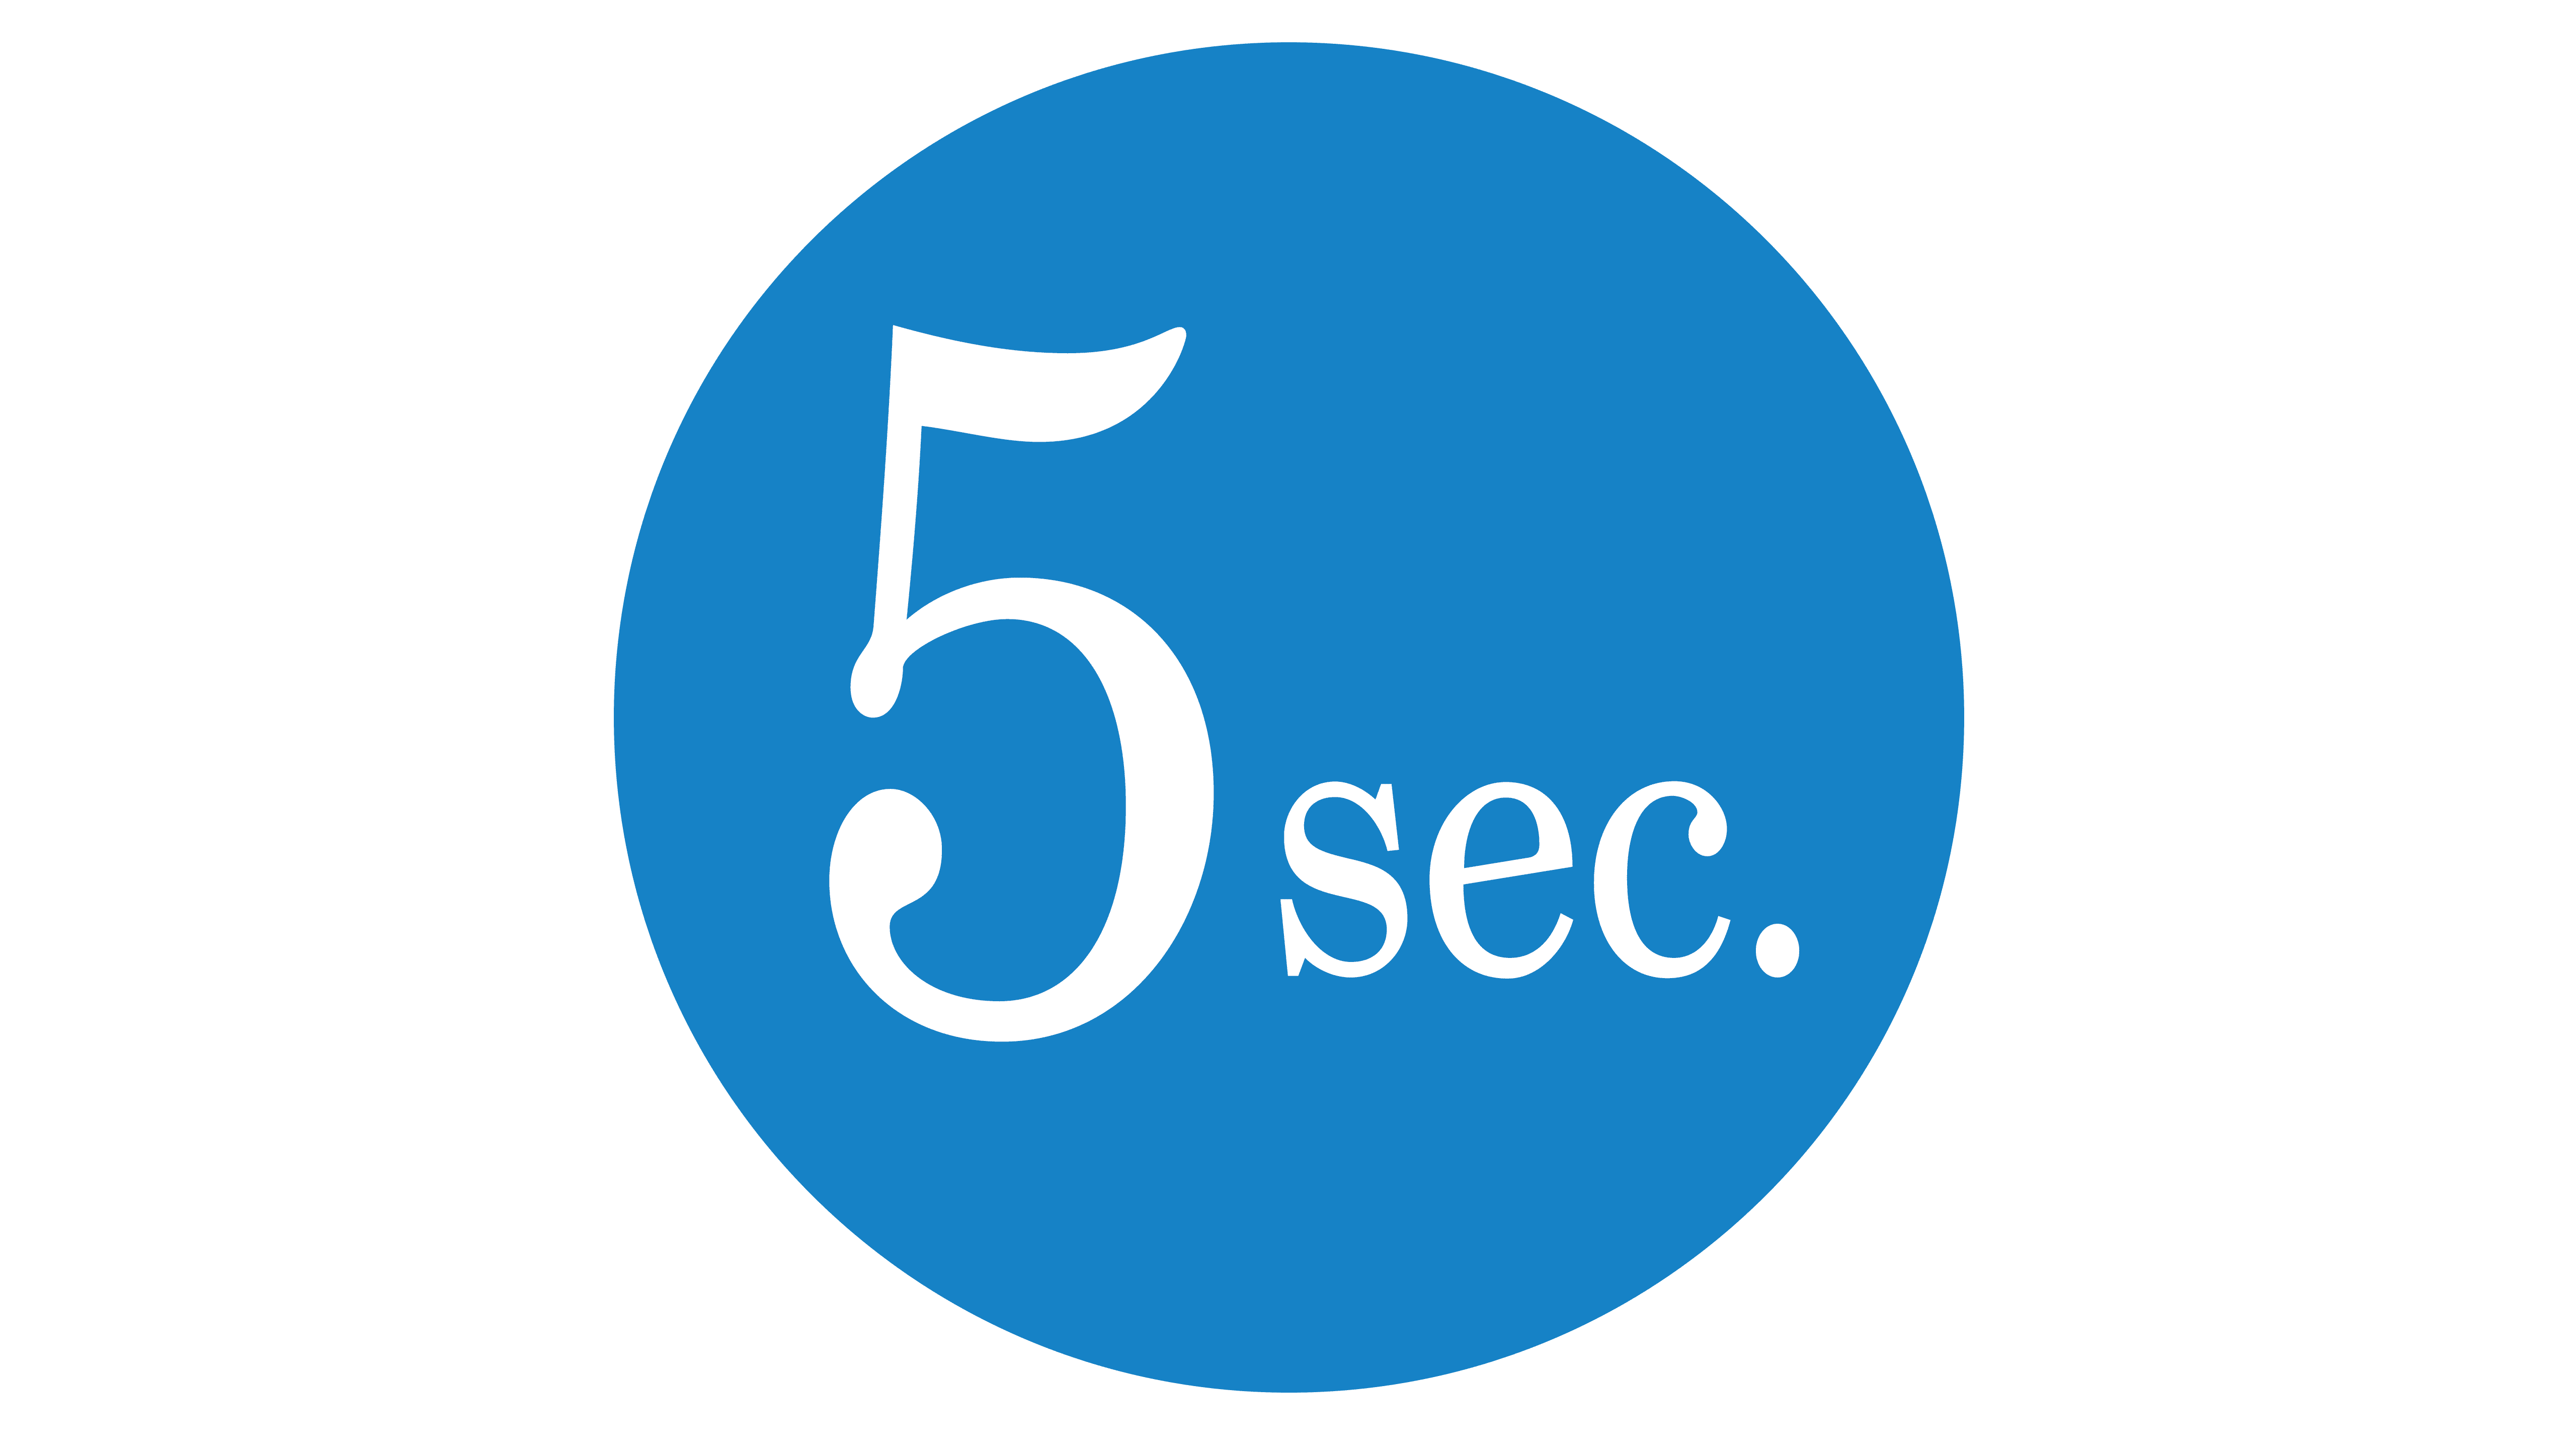 5 seconds web design